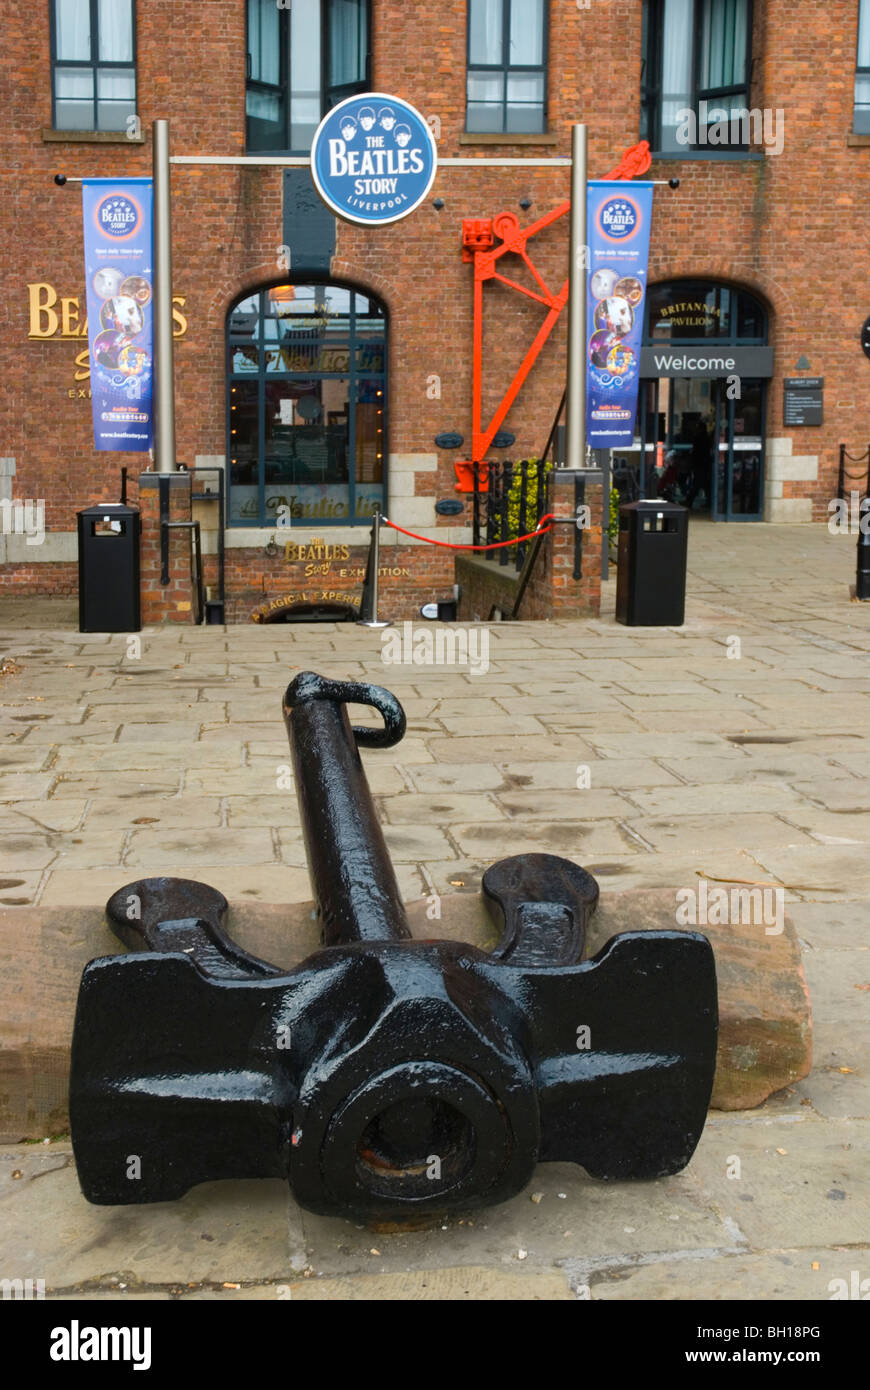 Die Beatles Story außen Albert Dock Komplex Liverpool England UK Mitteleuropa Stockfoto